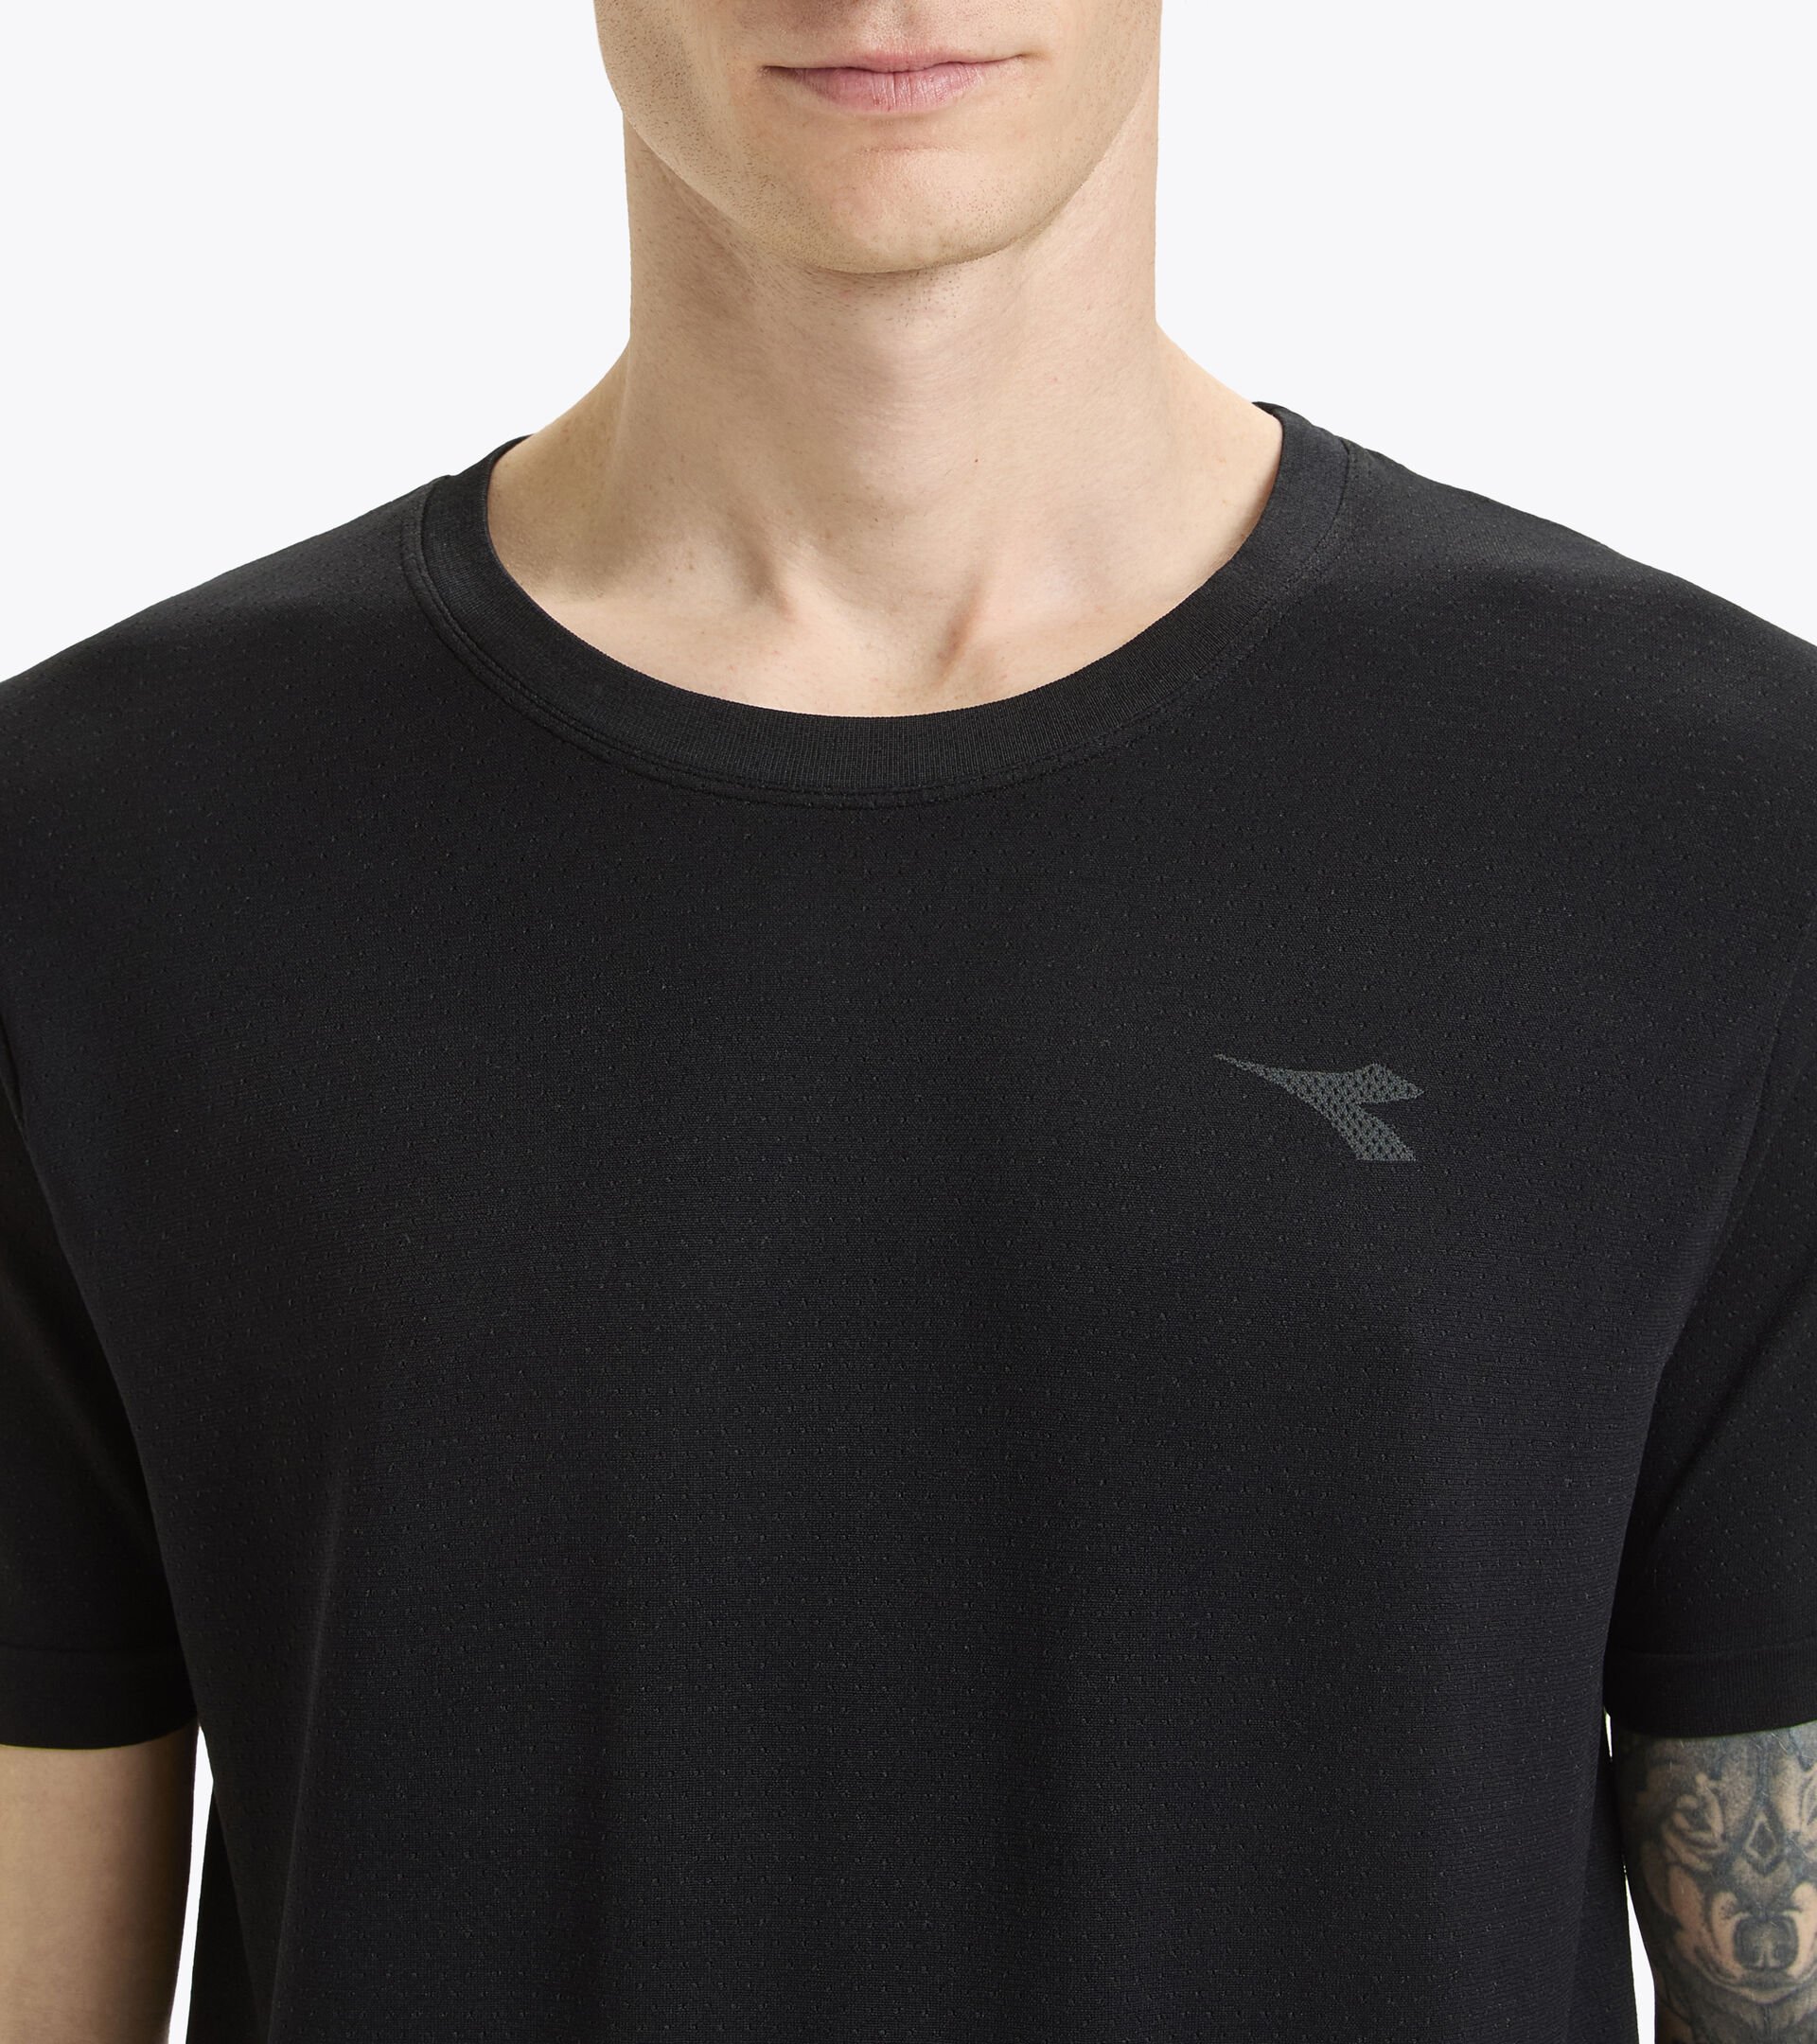 Seamless running t-shirt - Made in Italy - Men’s SS T-SHIRT SKIN FRIENDLY BLACK - Diadora